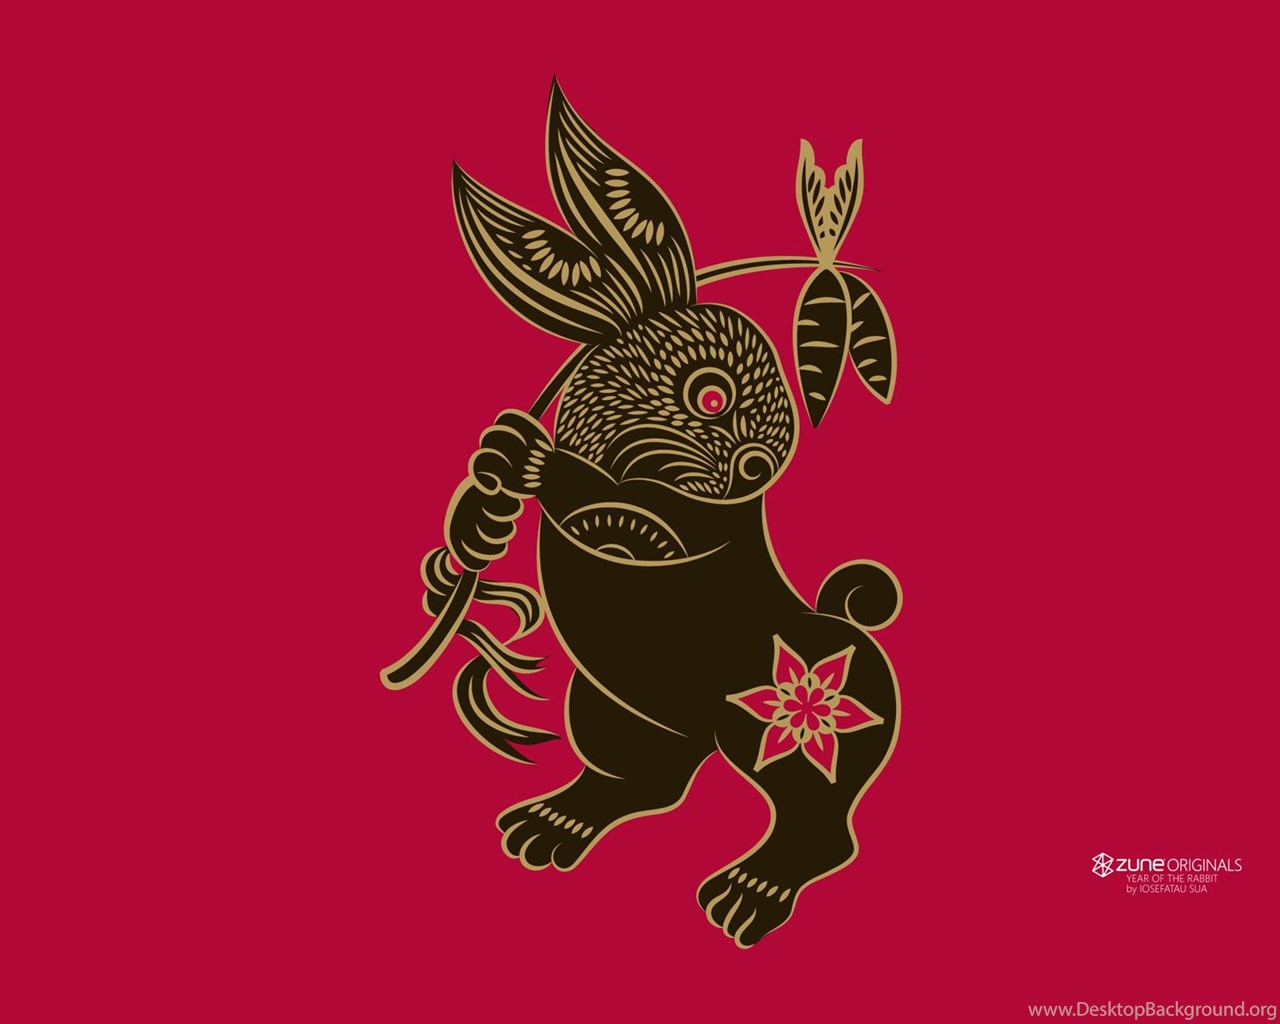 25+] Chinese Zodiac Rabbit Wallpapers on WallpaperSafari